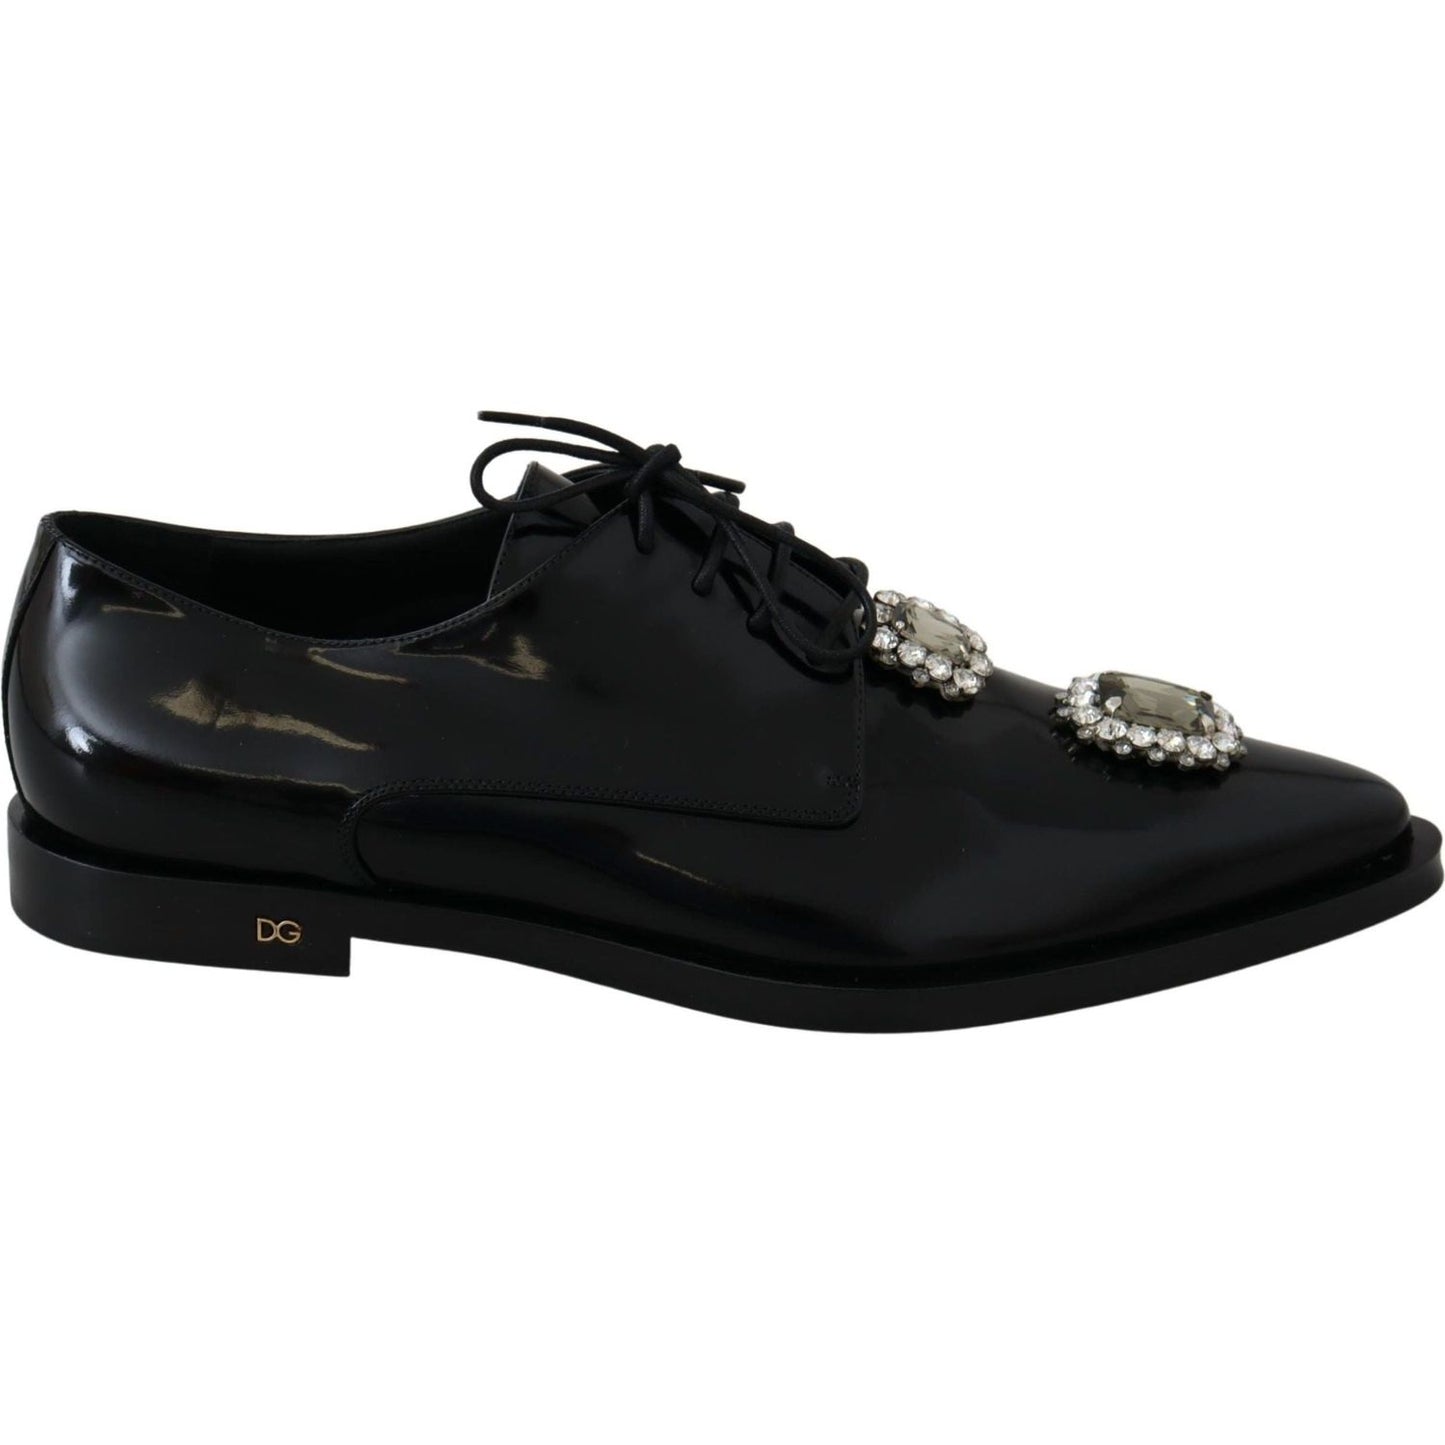 Dolce & Gabbana Crystal Embellished Derby Dress Shoes black-leather-crystal-lace-up-formal-shoes